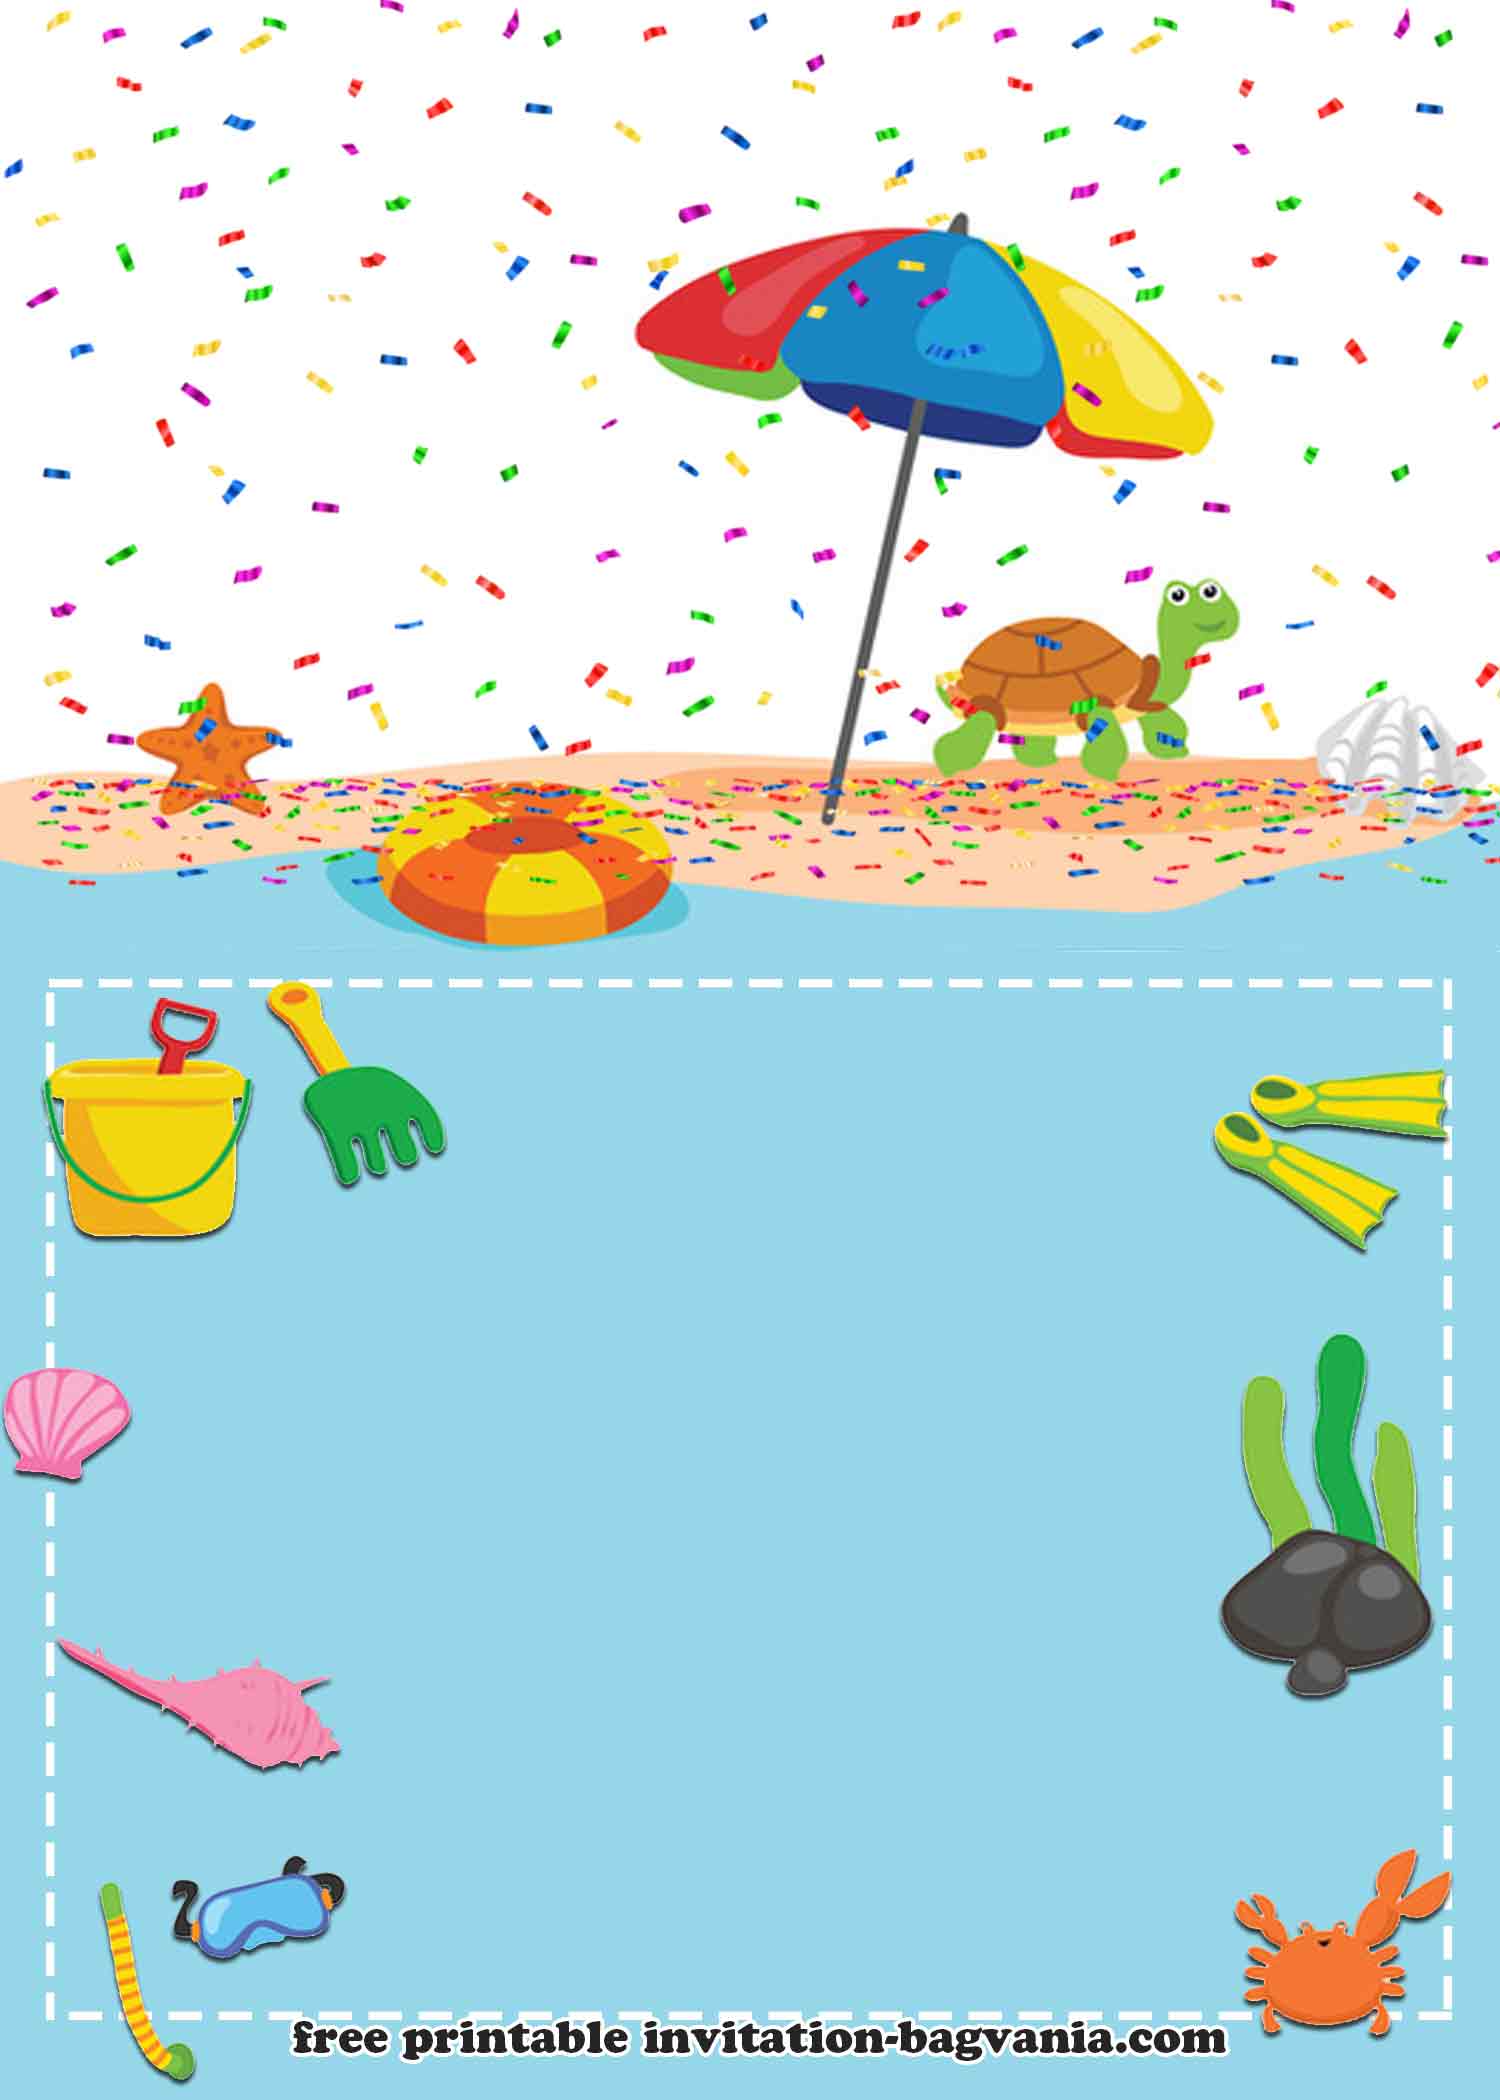 FREE Beach Theme Birthday Invitation Templates Download Hundreds FREE